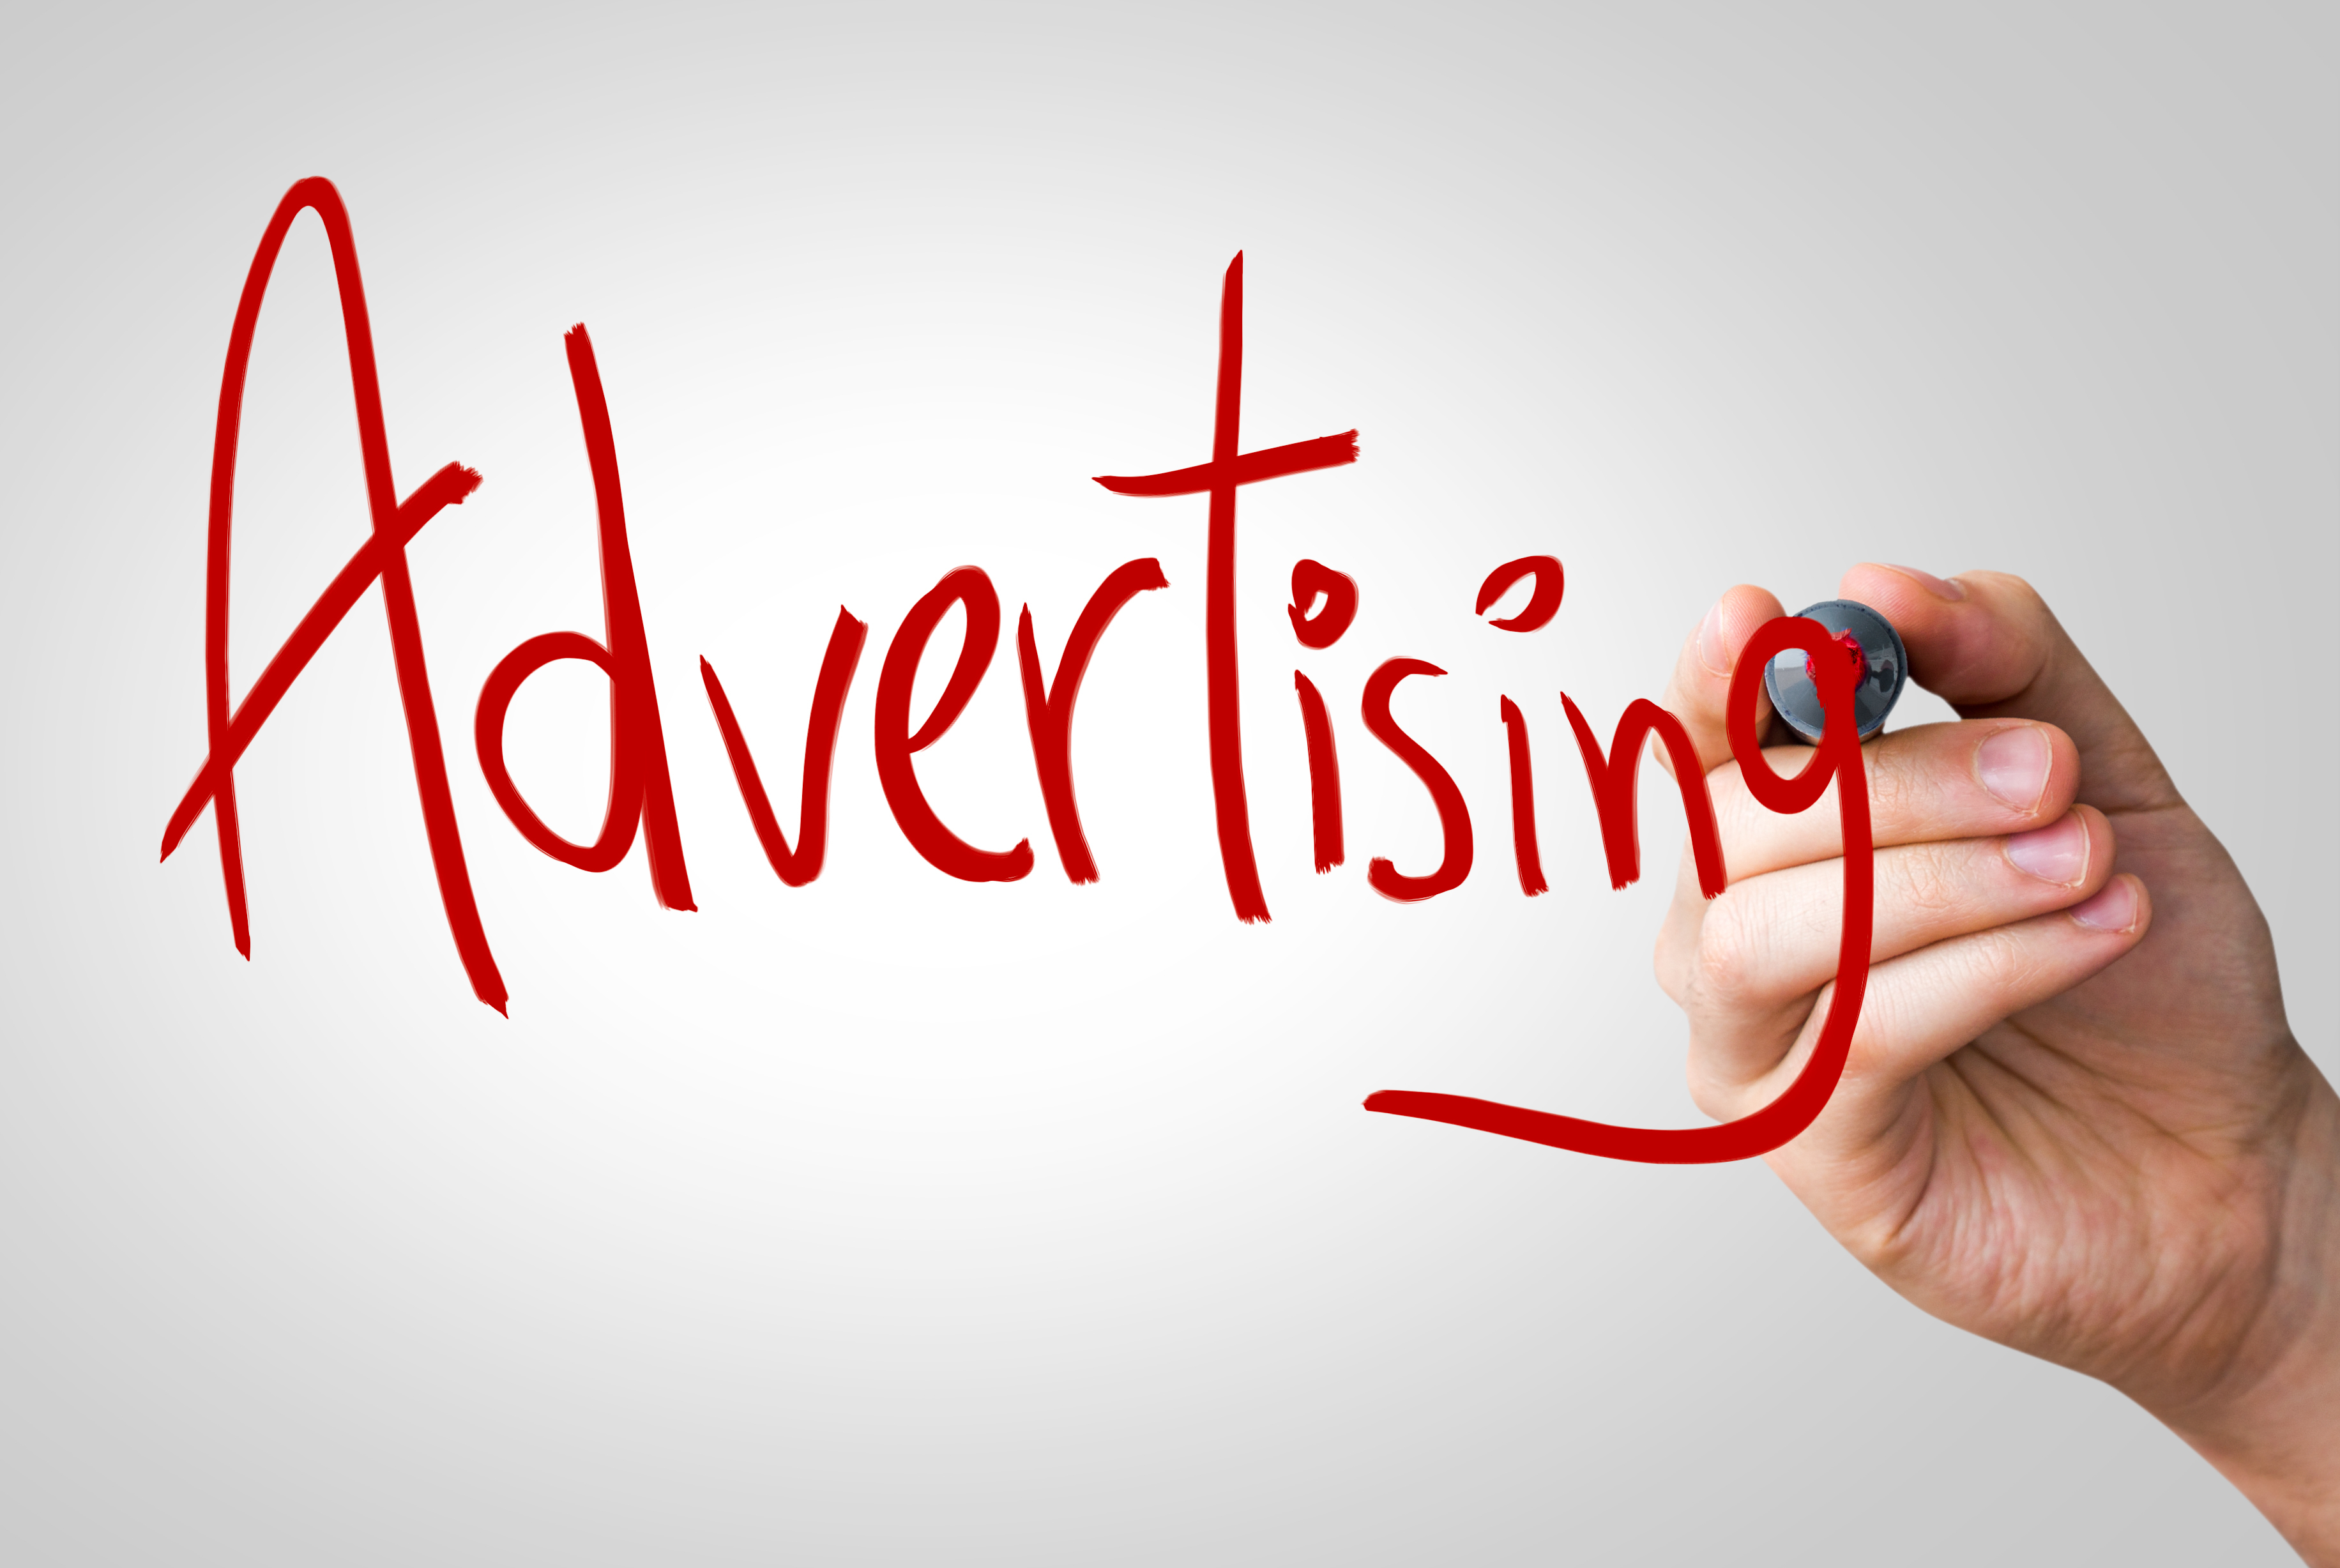 Advertising media is. Рекламные картинки. Реклама изображение. Картинки на тему реклама. Advertising надпись.